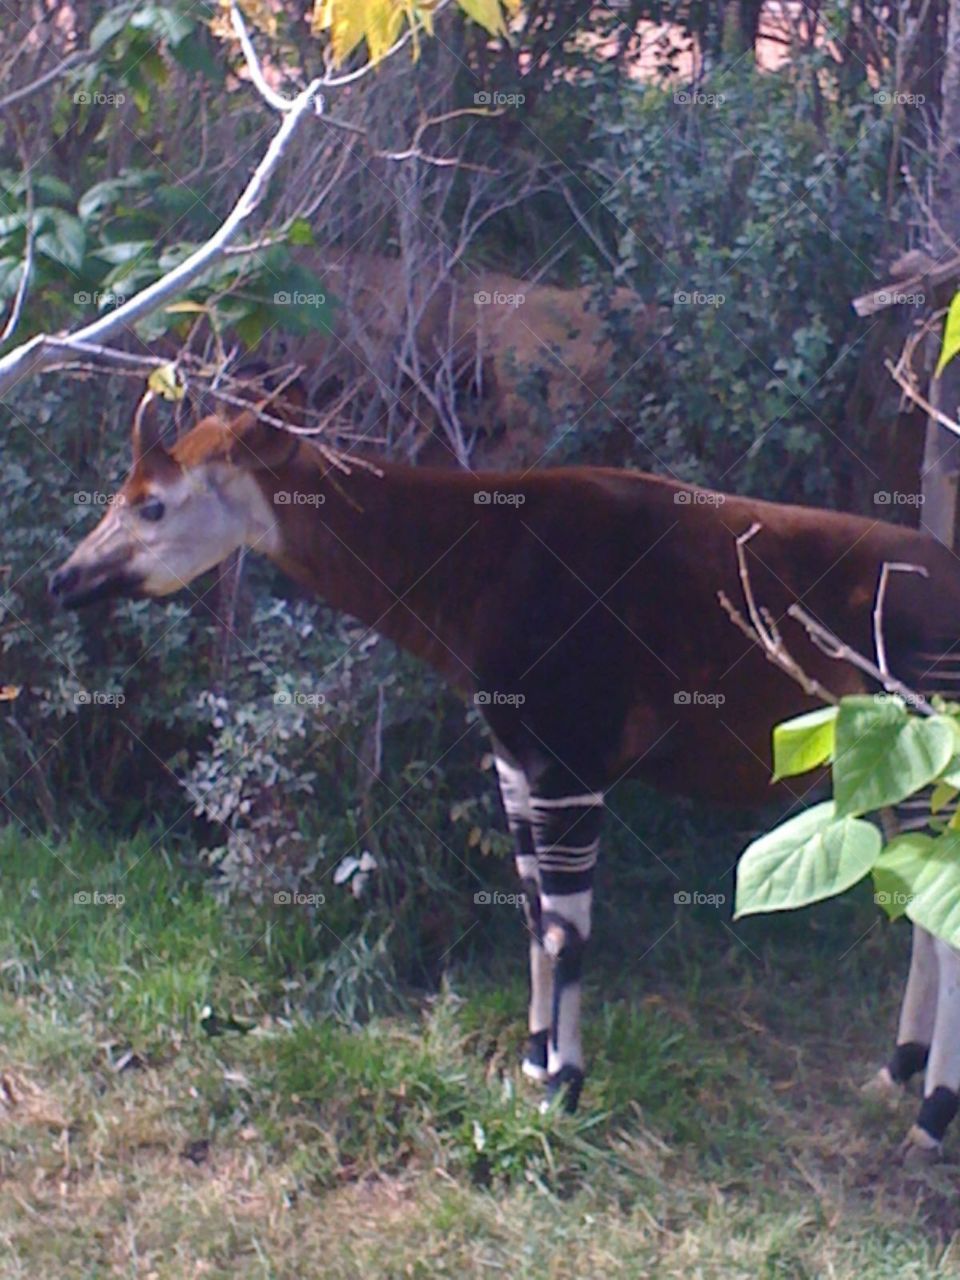 Okapi at the San Francisco zoo, California.